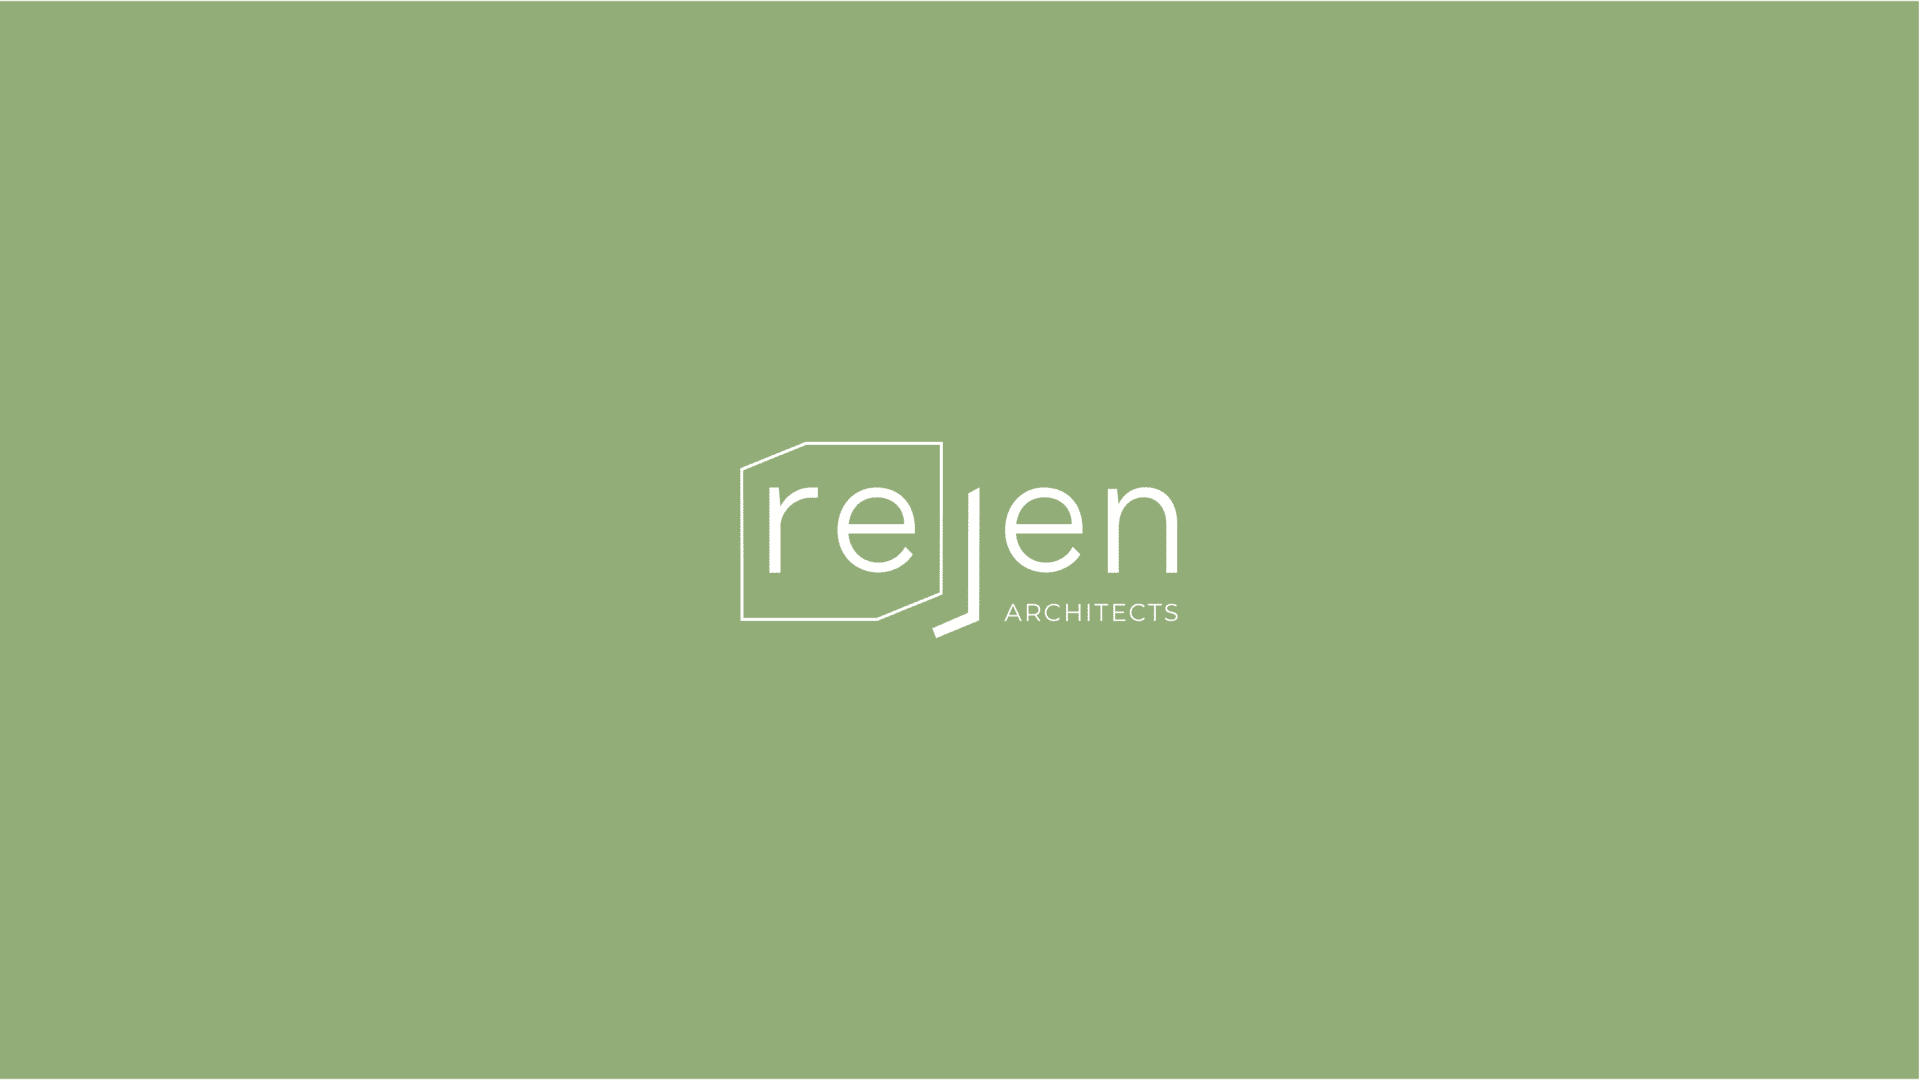 rejen architects new logo design by rapid agency